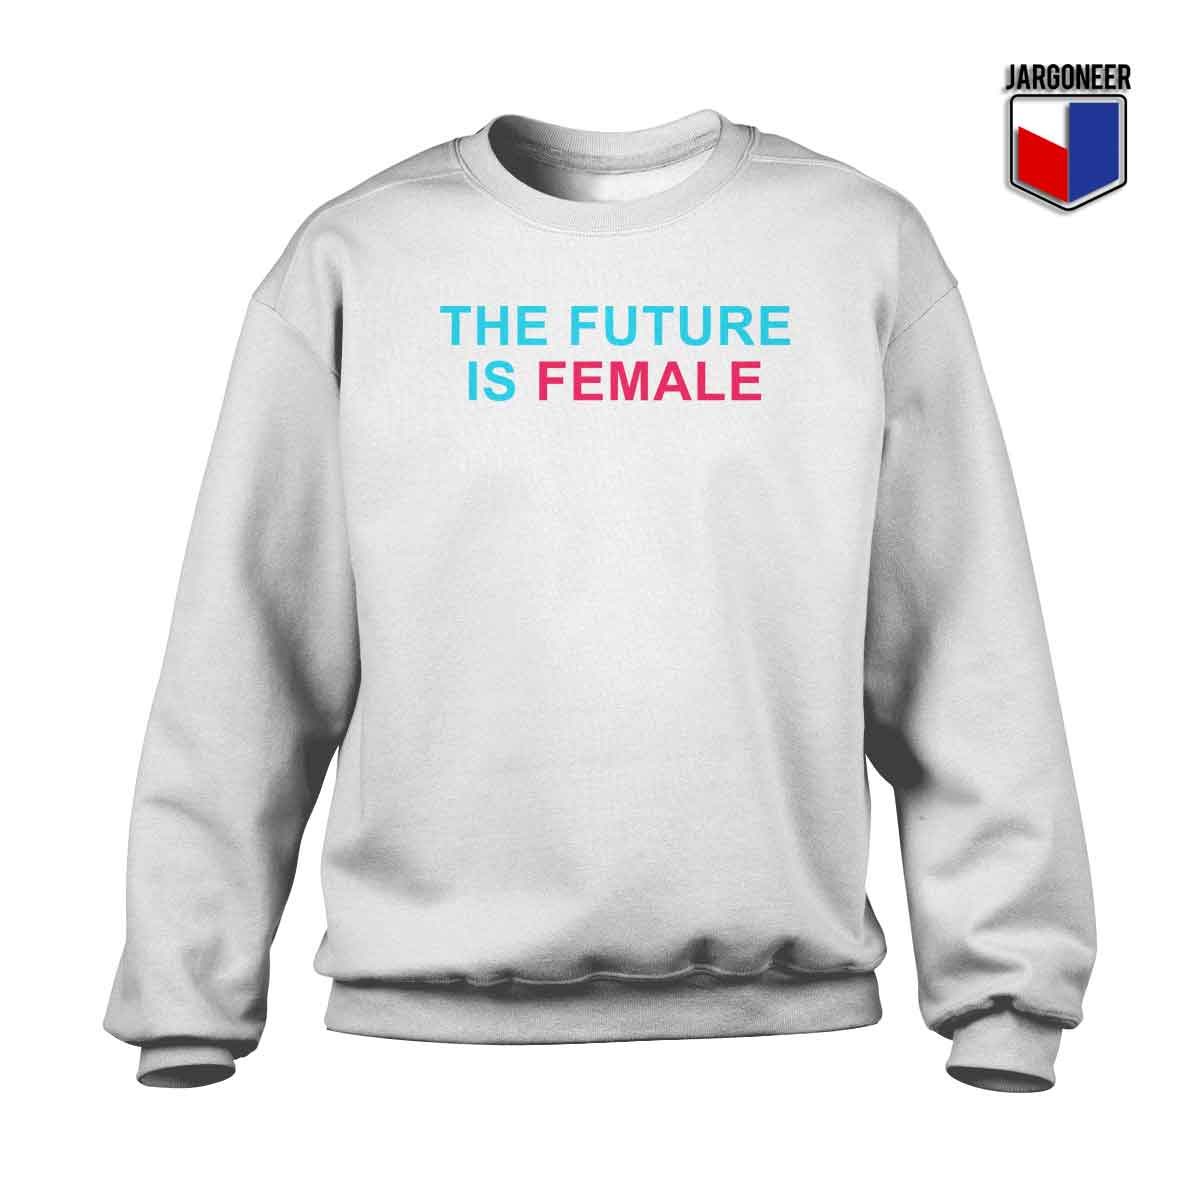 The Future Is Female - Shop Unique Graphic Cool Shirt Designs